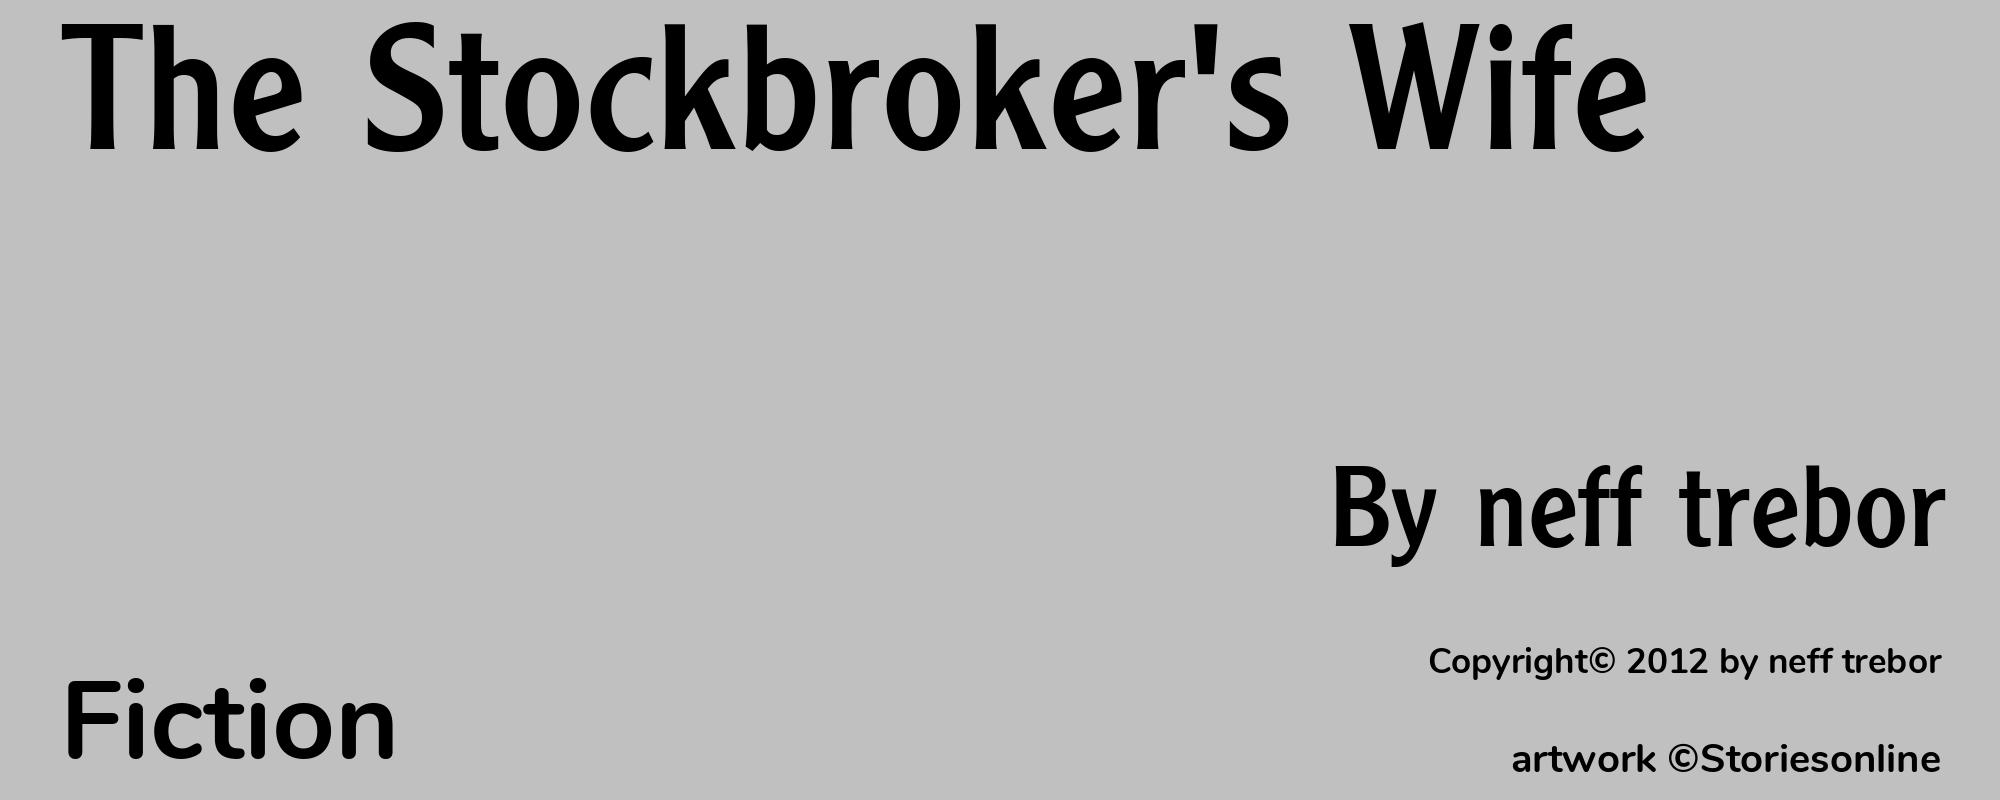 The Stockbroker's Wife - Cover